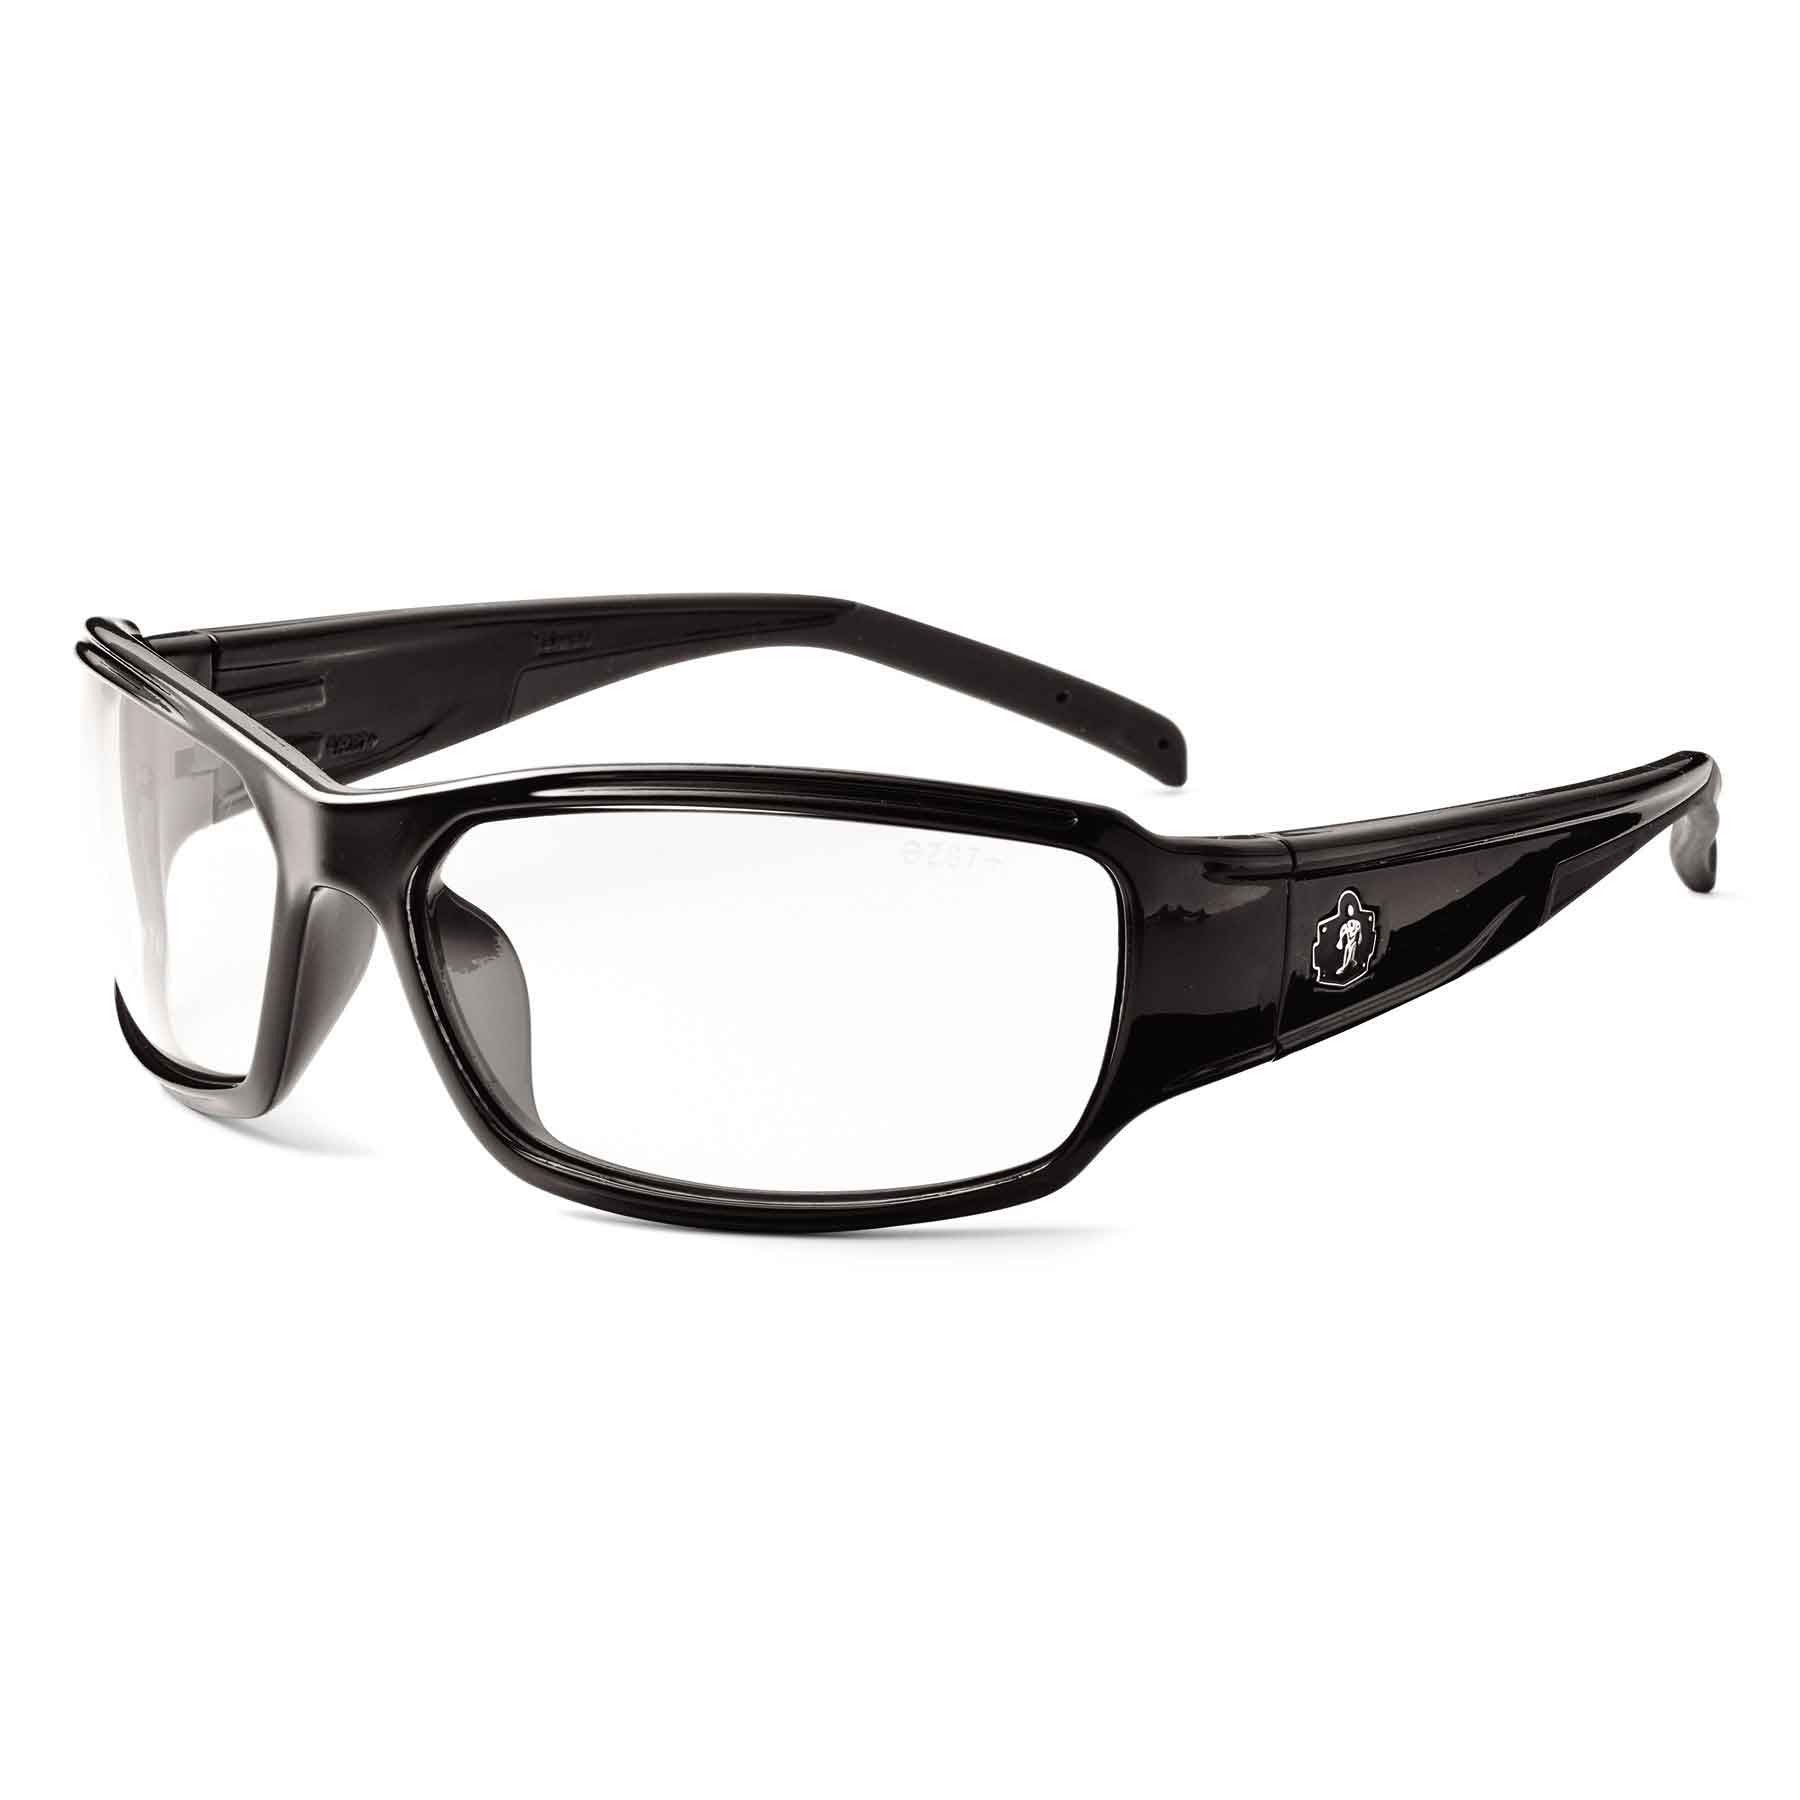 Skullerz Thor Safety Glasses-eSafety Supplies, Inc